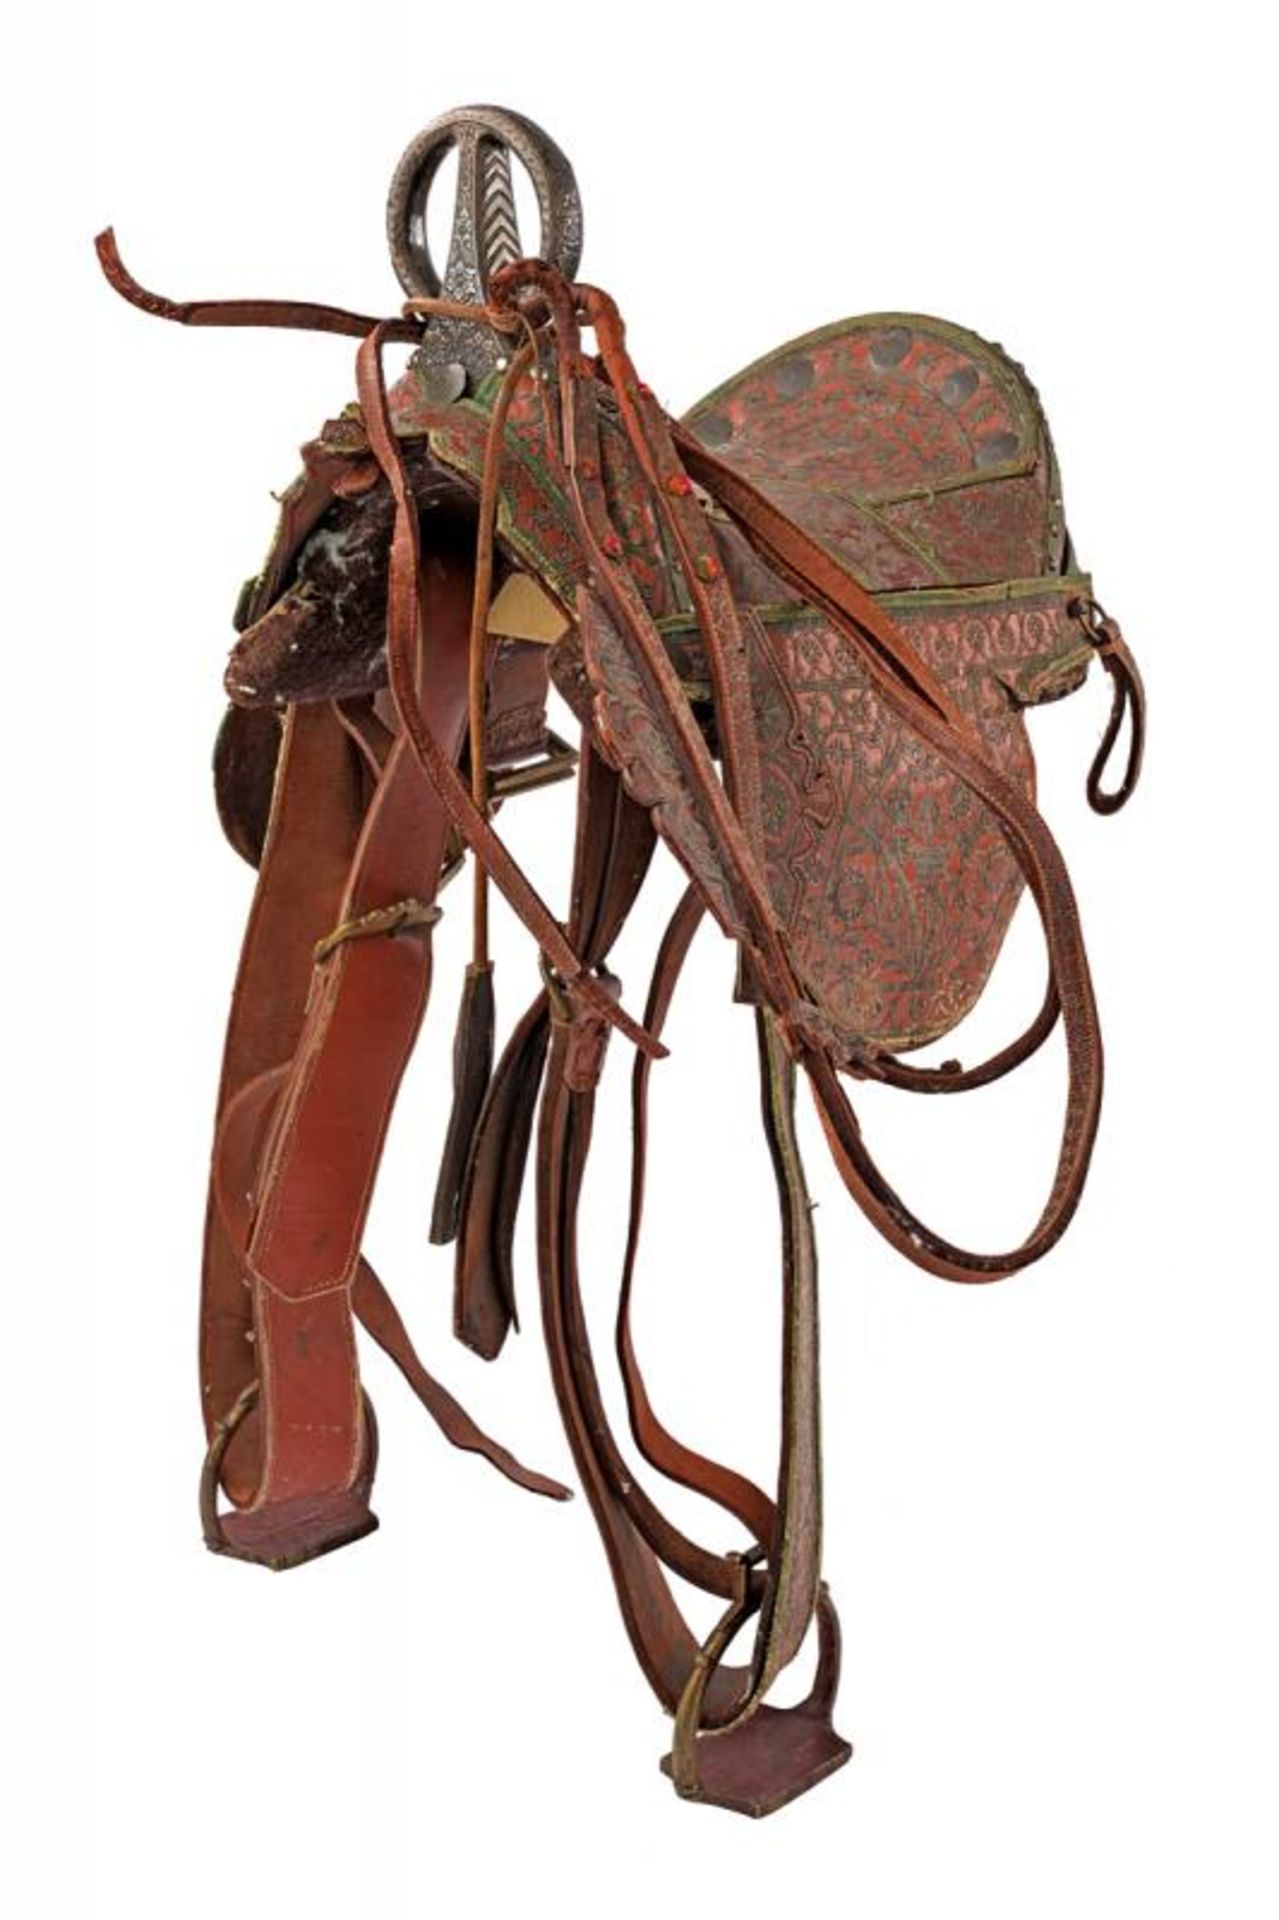 A beautiful saddle